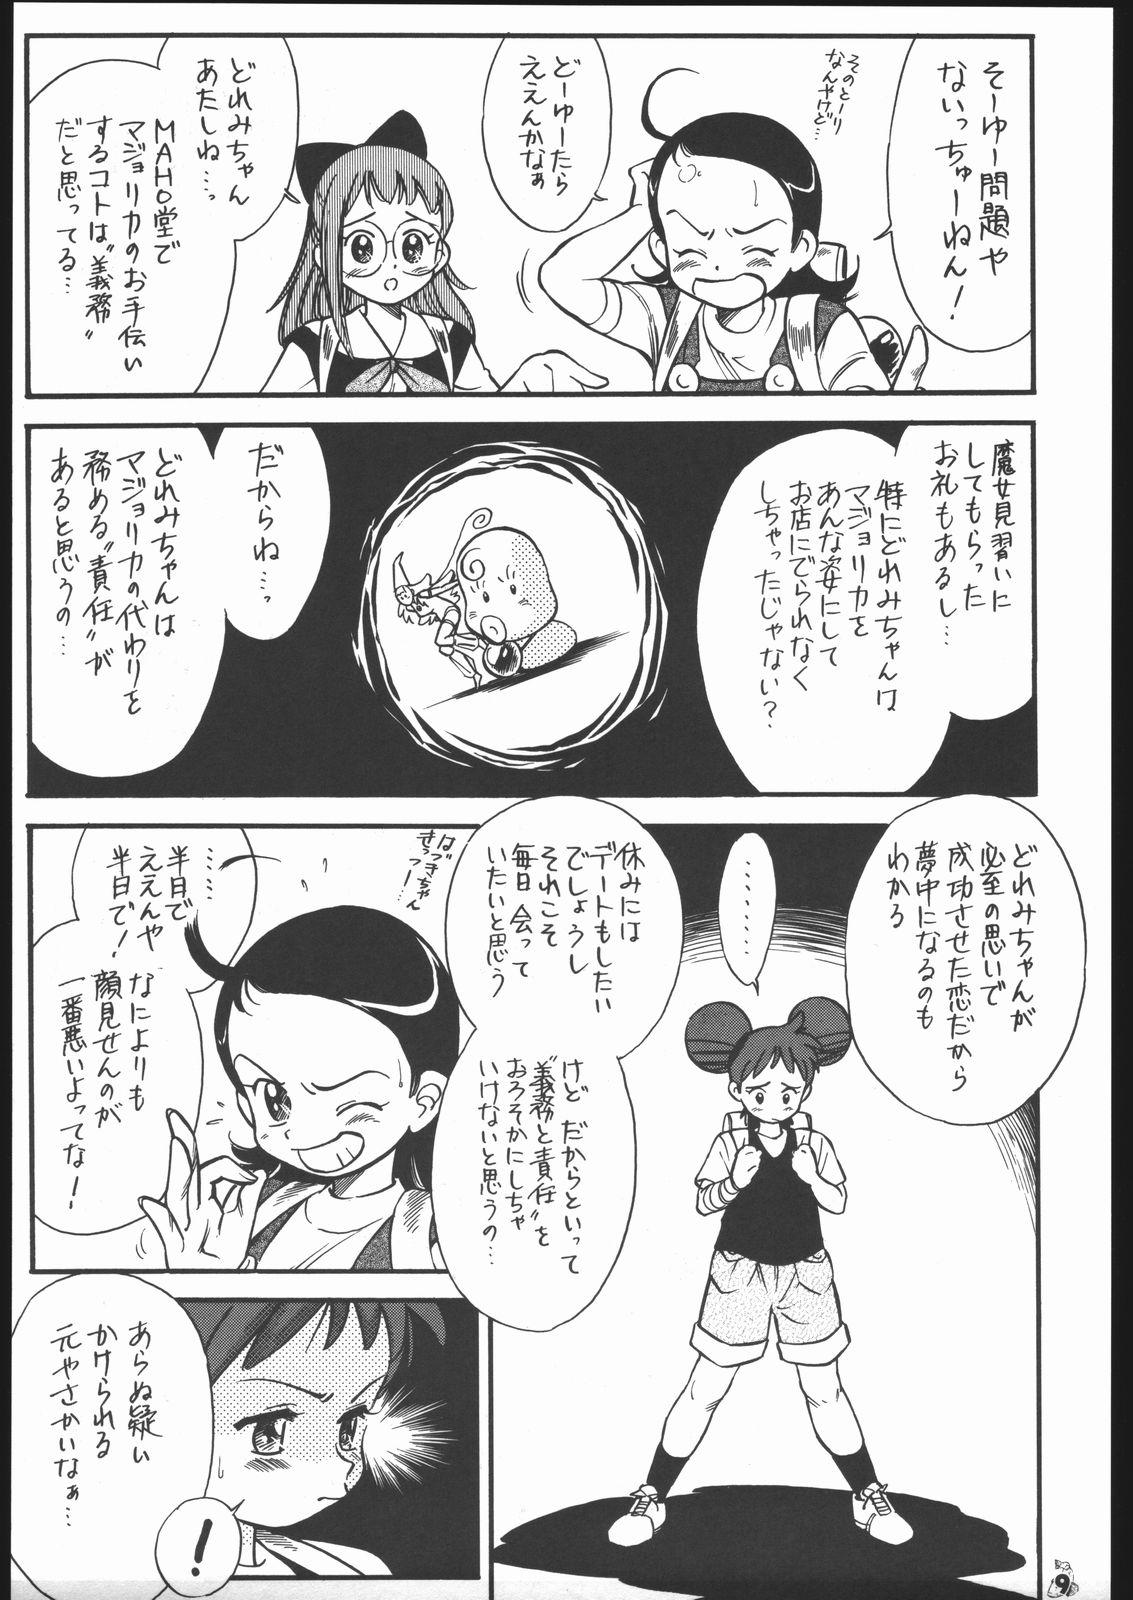 Bunduda Oudou - Sakura taisen Ojamajo doremi Virtua fighter Twerk - Page 8